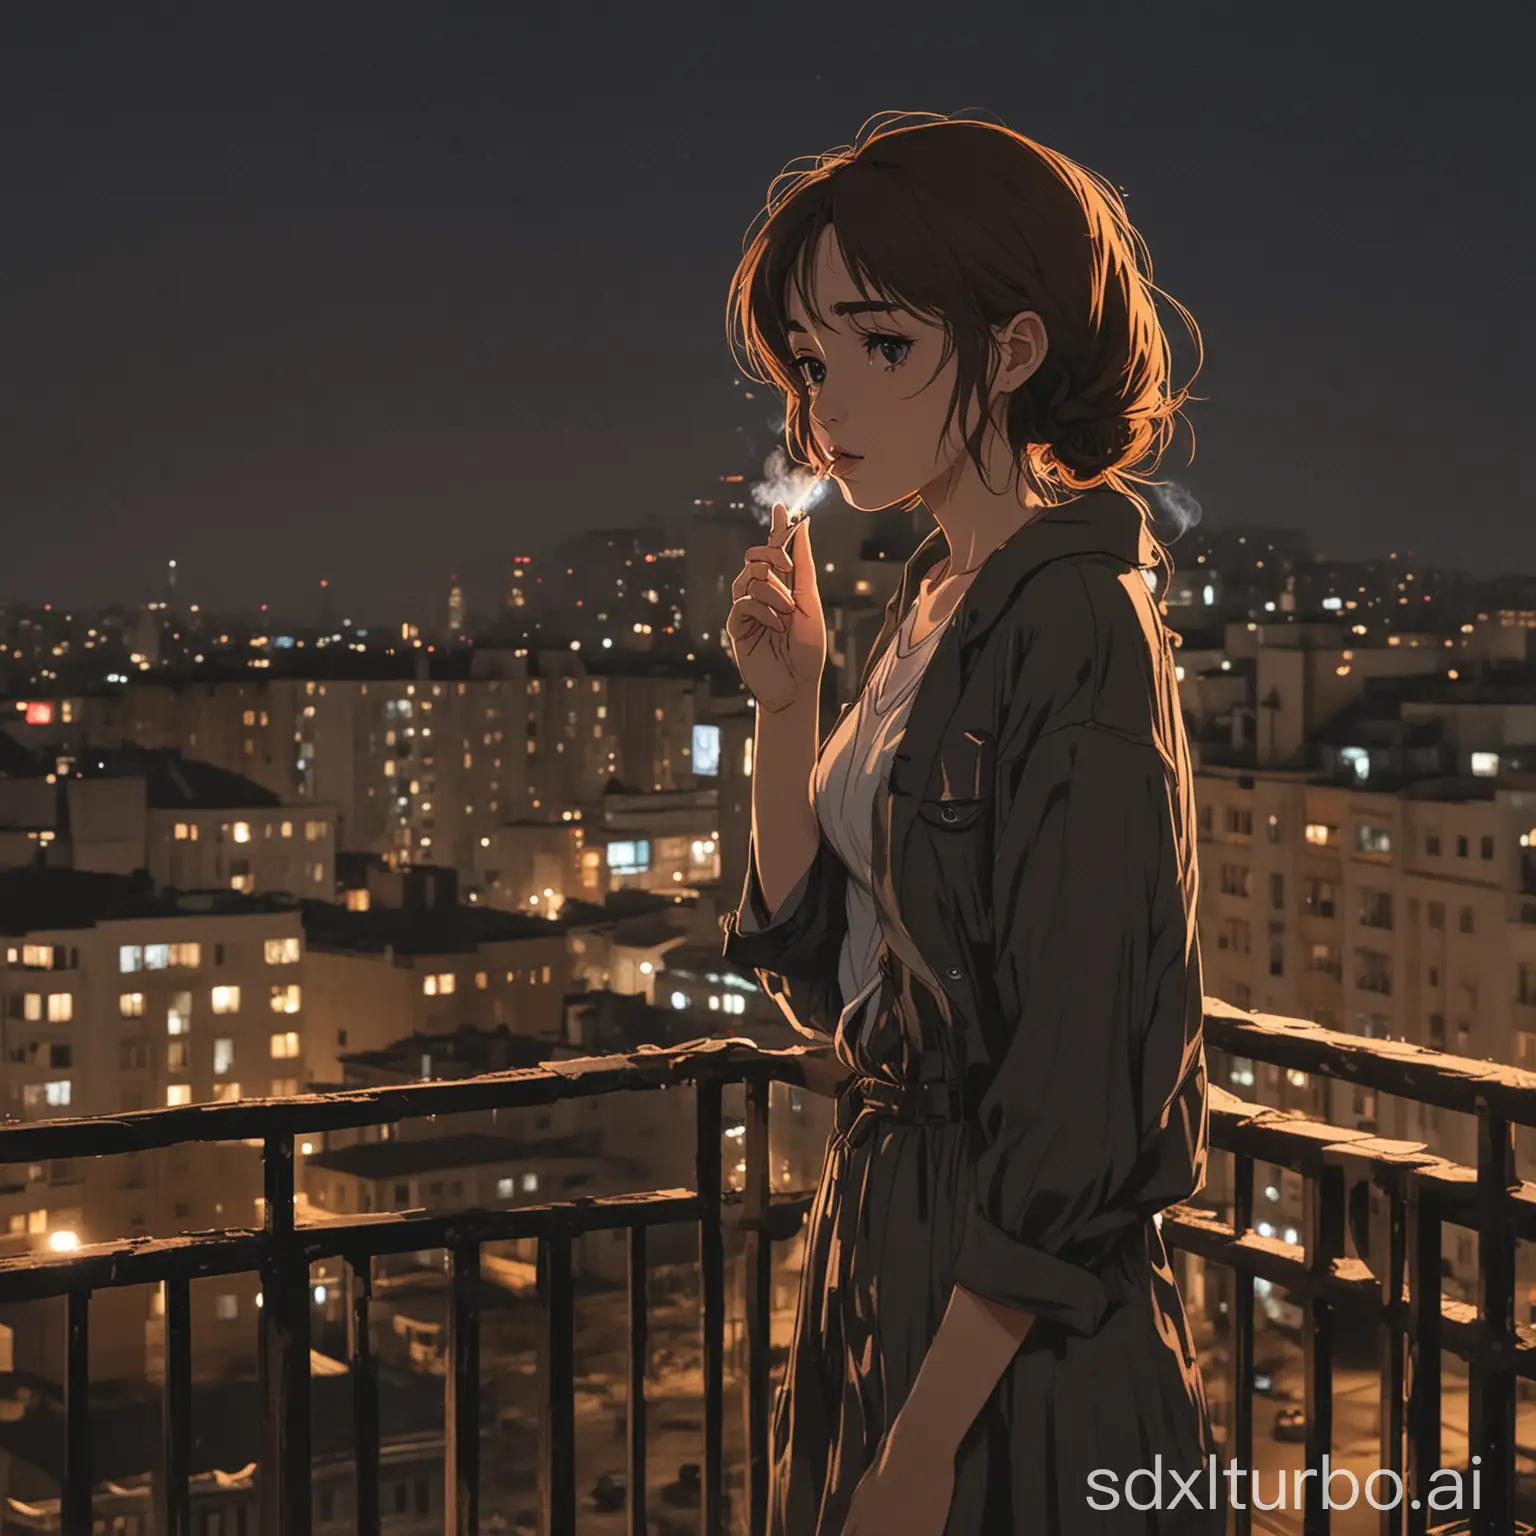 Lonely-Anime-Girl-Smoking-on-Balcony-in-PostSoviet-Night-Scene